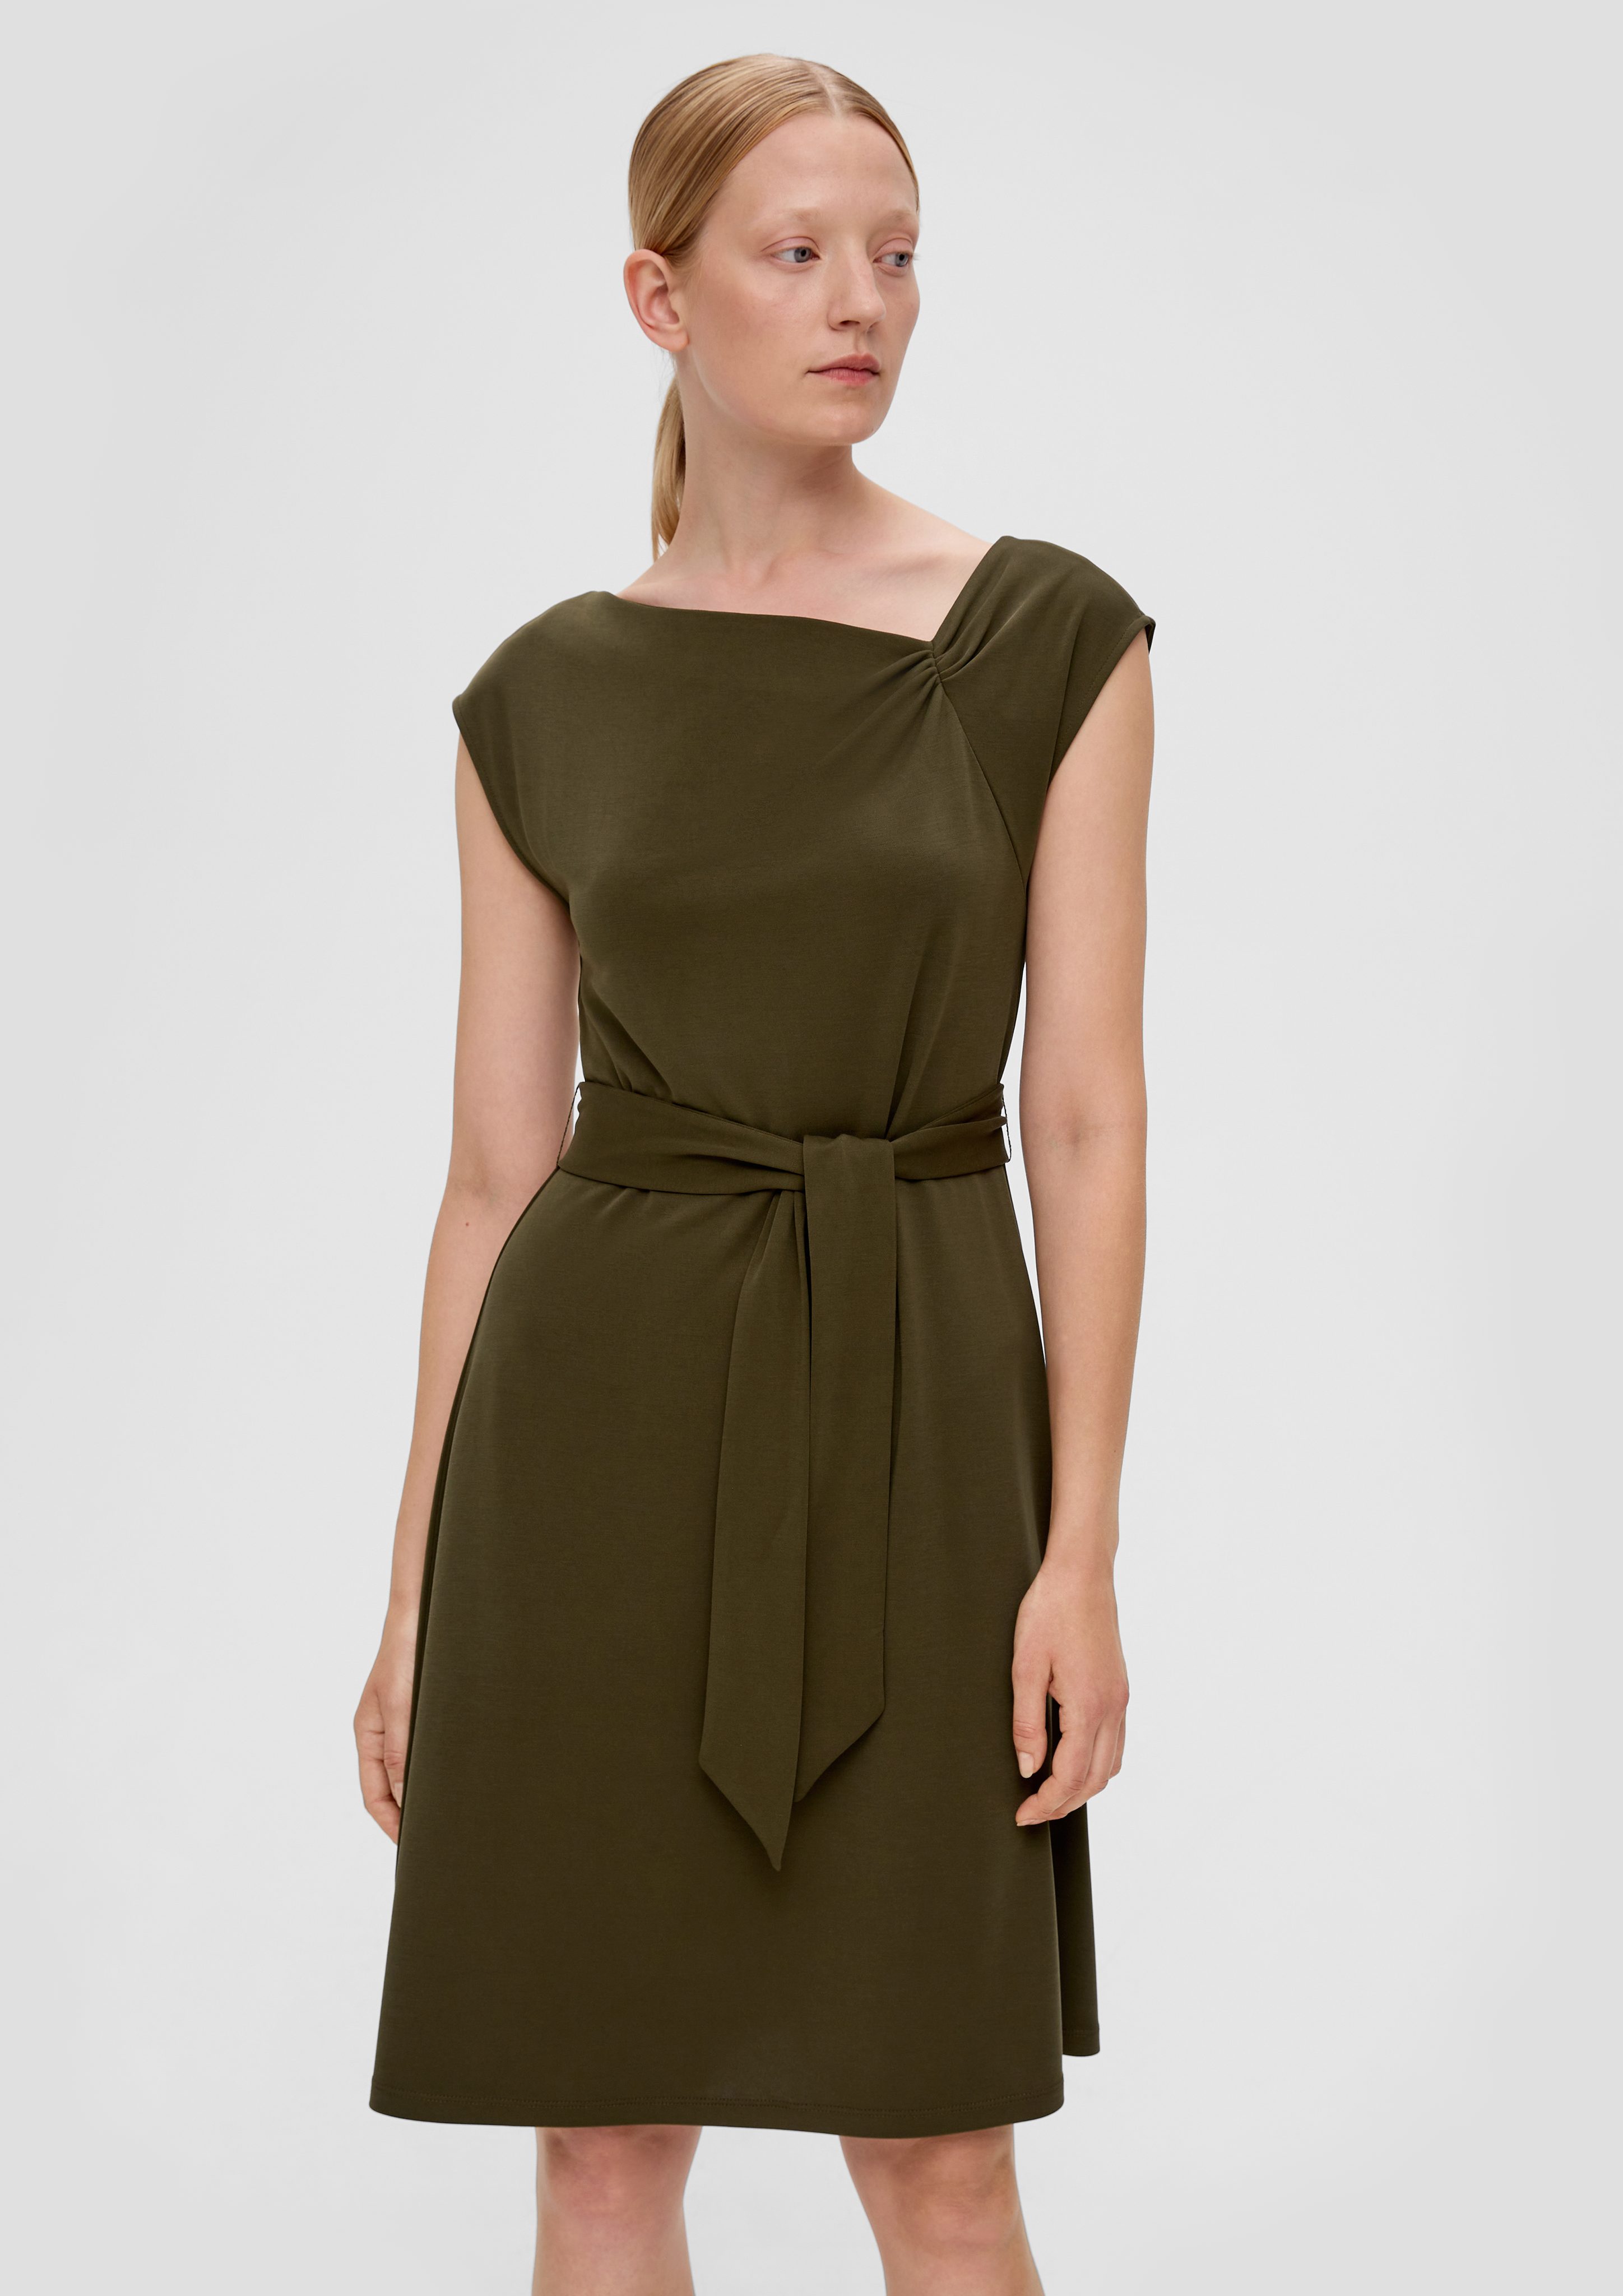 Minikleid s.Oliver mit olivgrün LABEL Kleid Kontrast-Details Knoten-Detail Kurzes BLACK